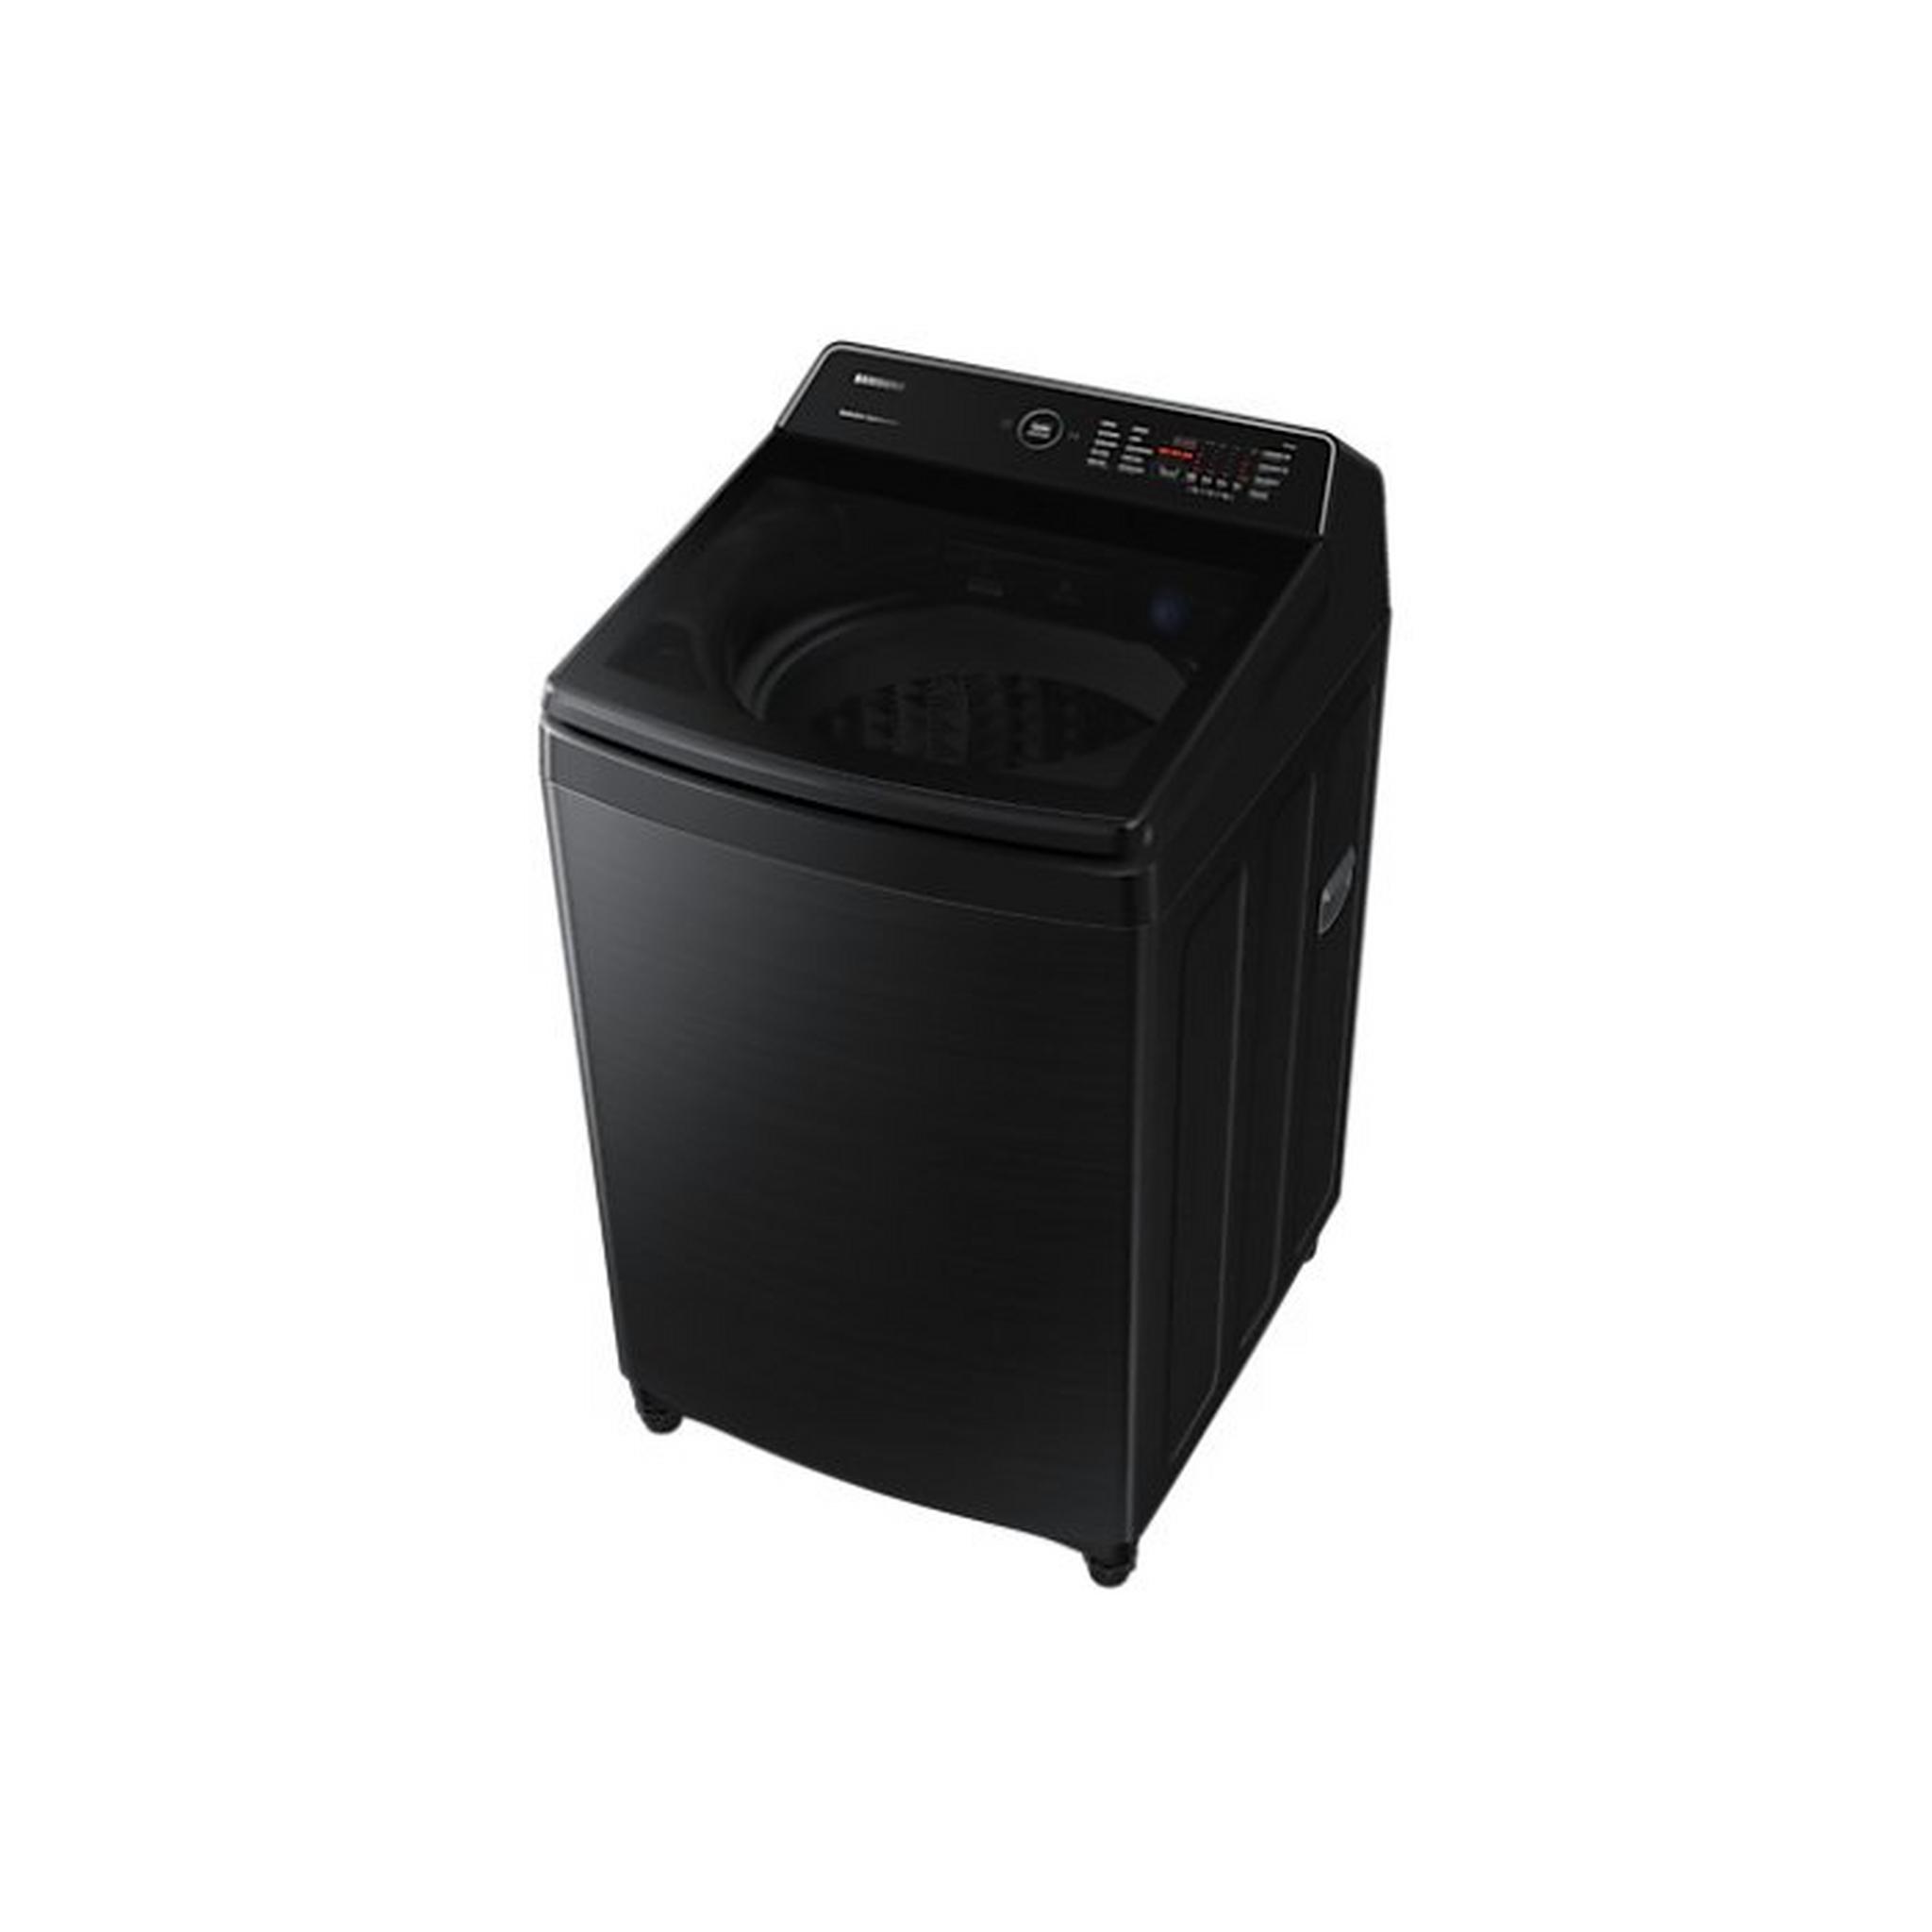 SAMSUNG Top Load with Ecobubble Washing Machine, 19KG, WA19CG6745BVSG – Black